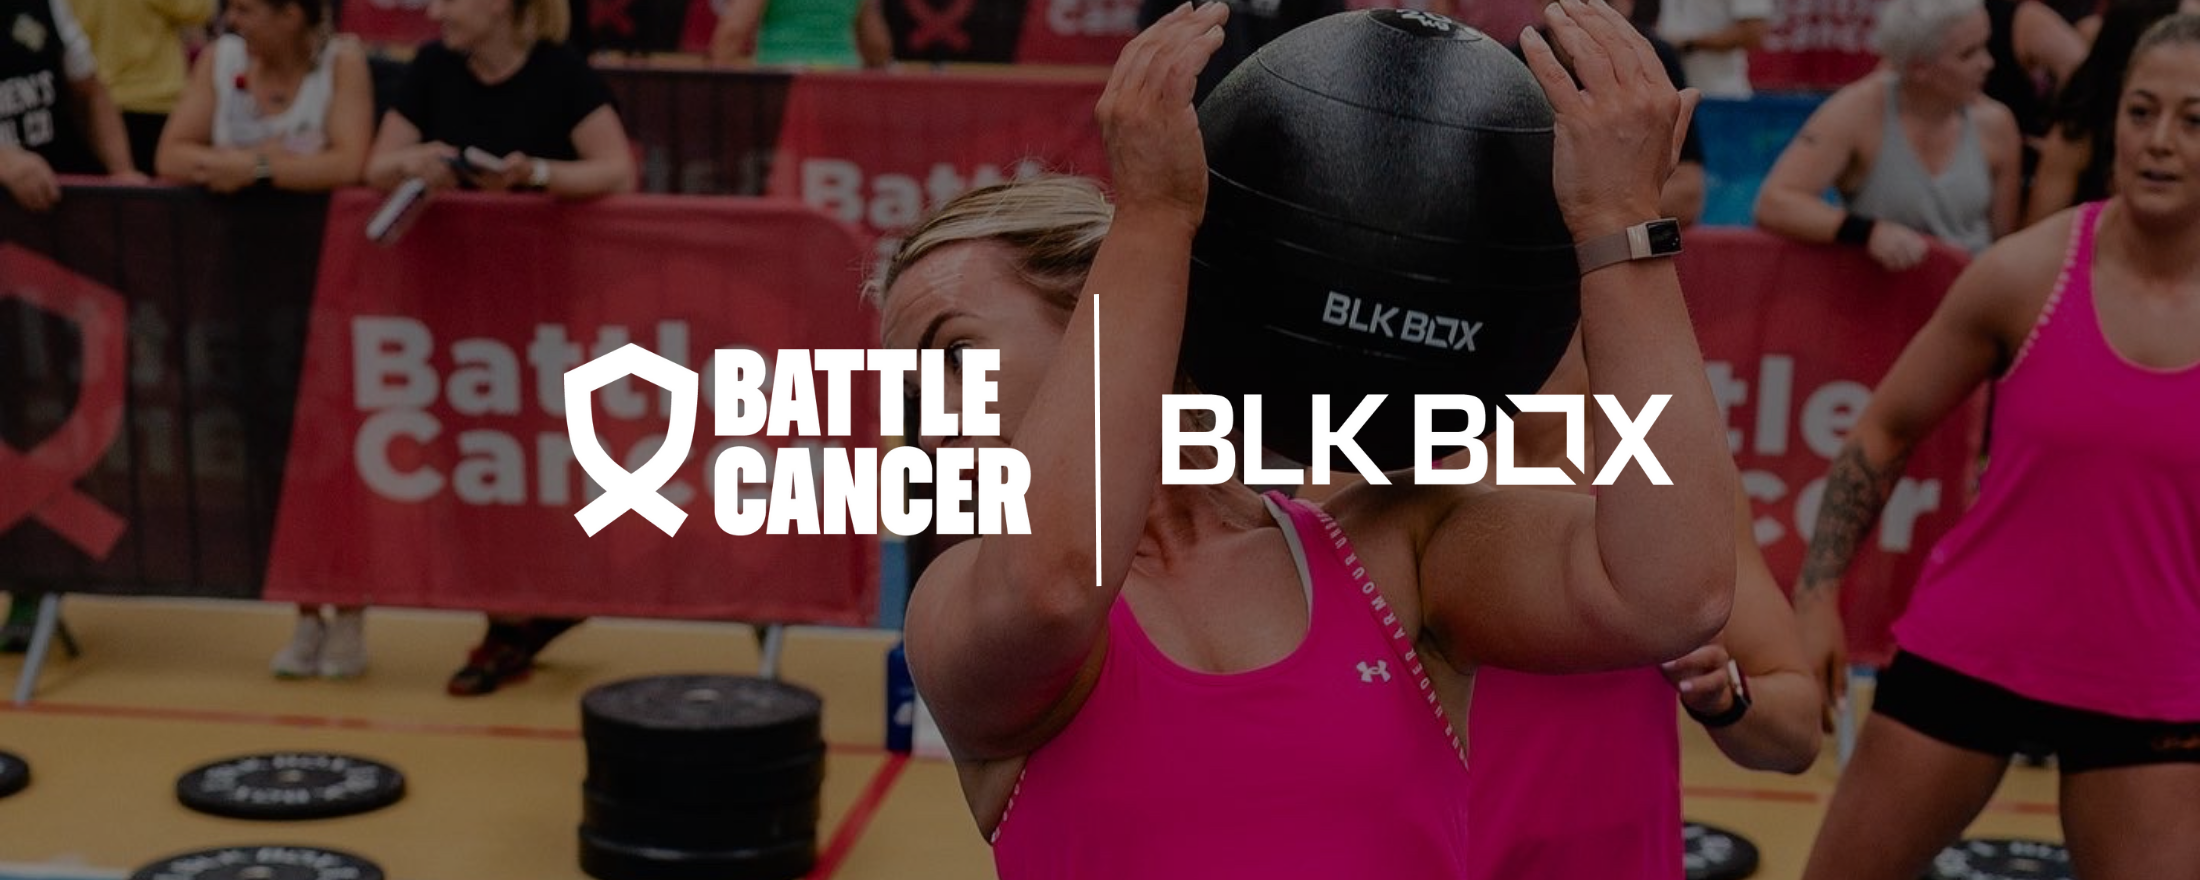 BLK BOX x Battle Cancer Dublin